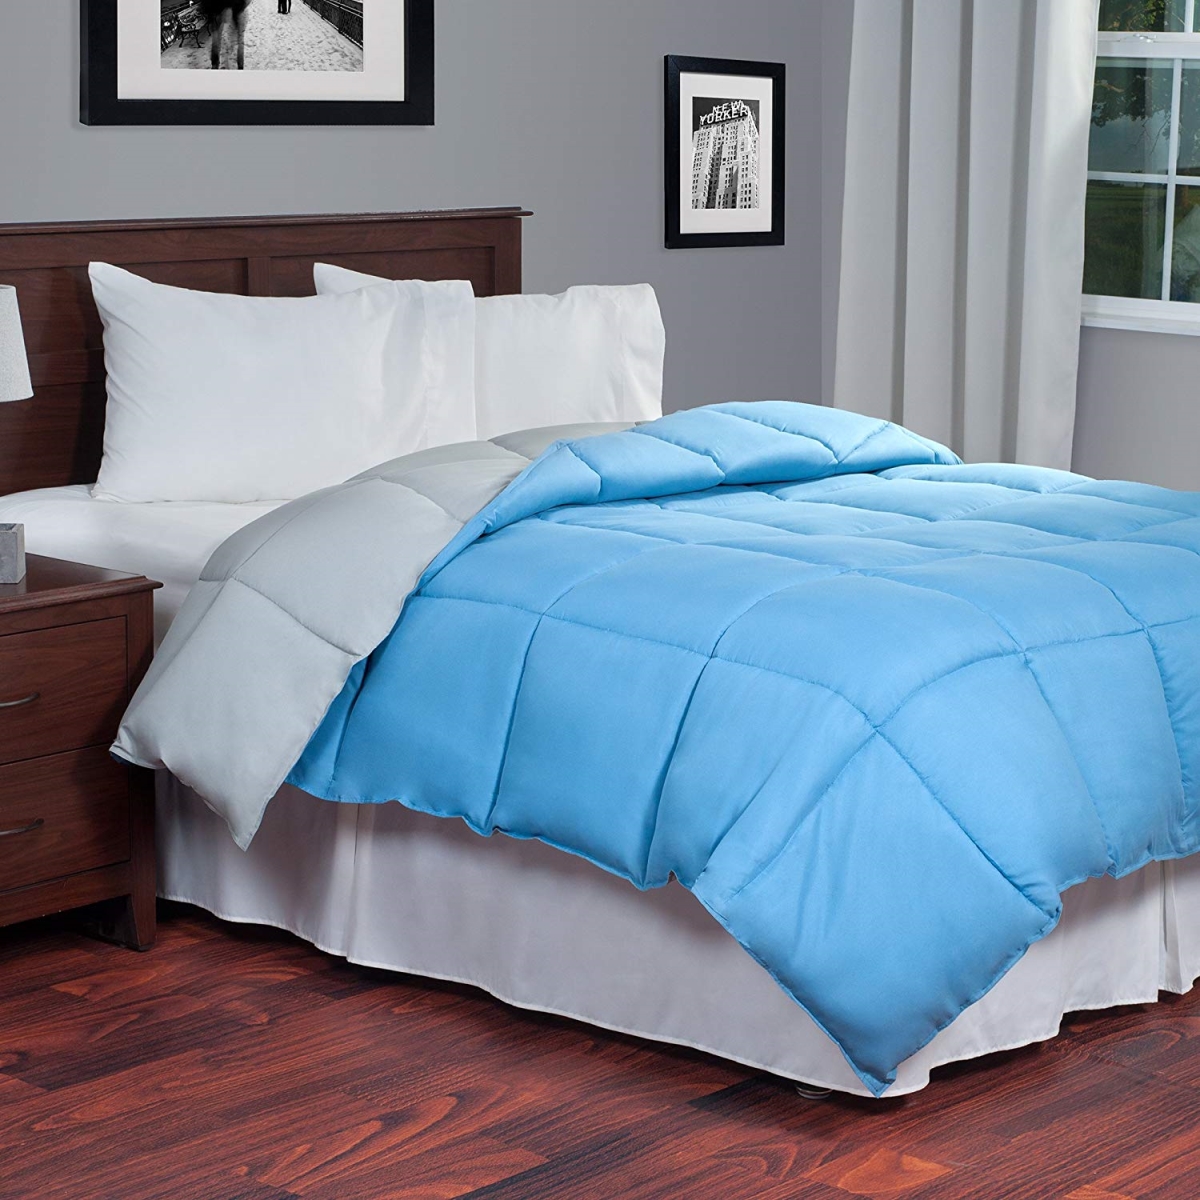 64a-23910 Reversible Down Alternative Comforter, King Size - Dark Green & Dark Blue